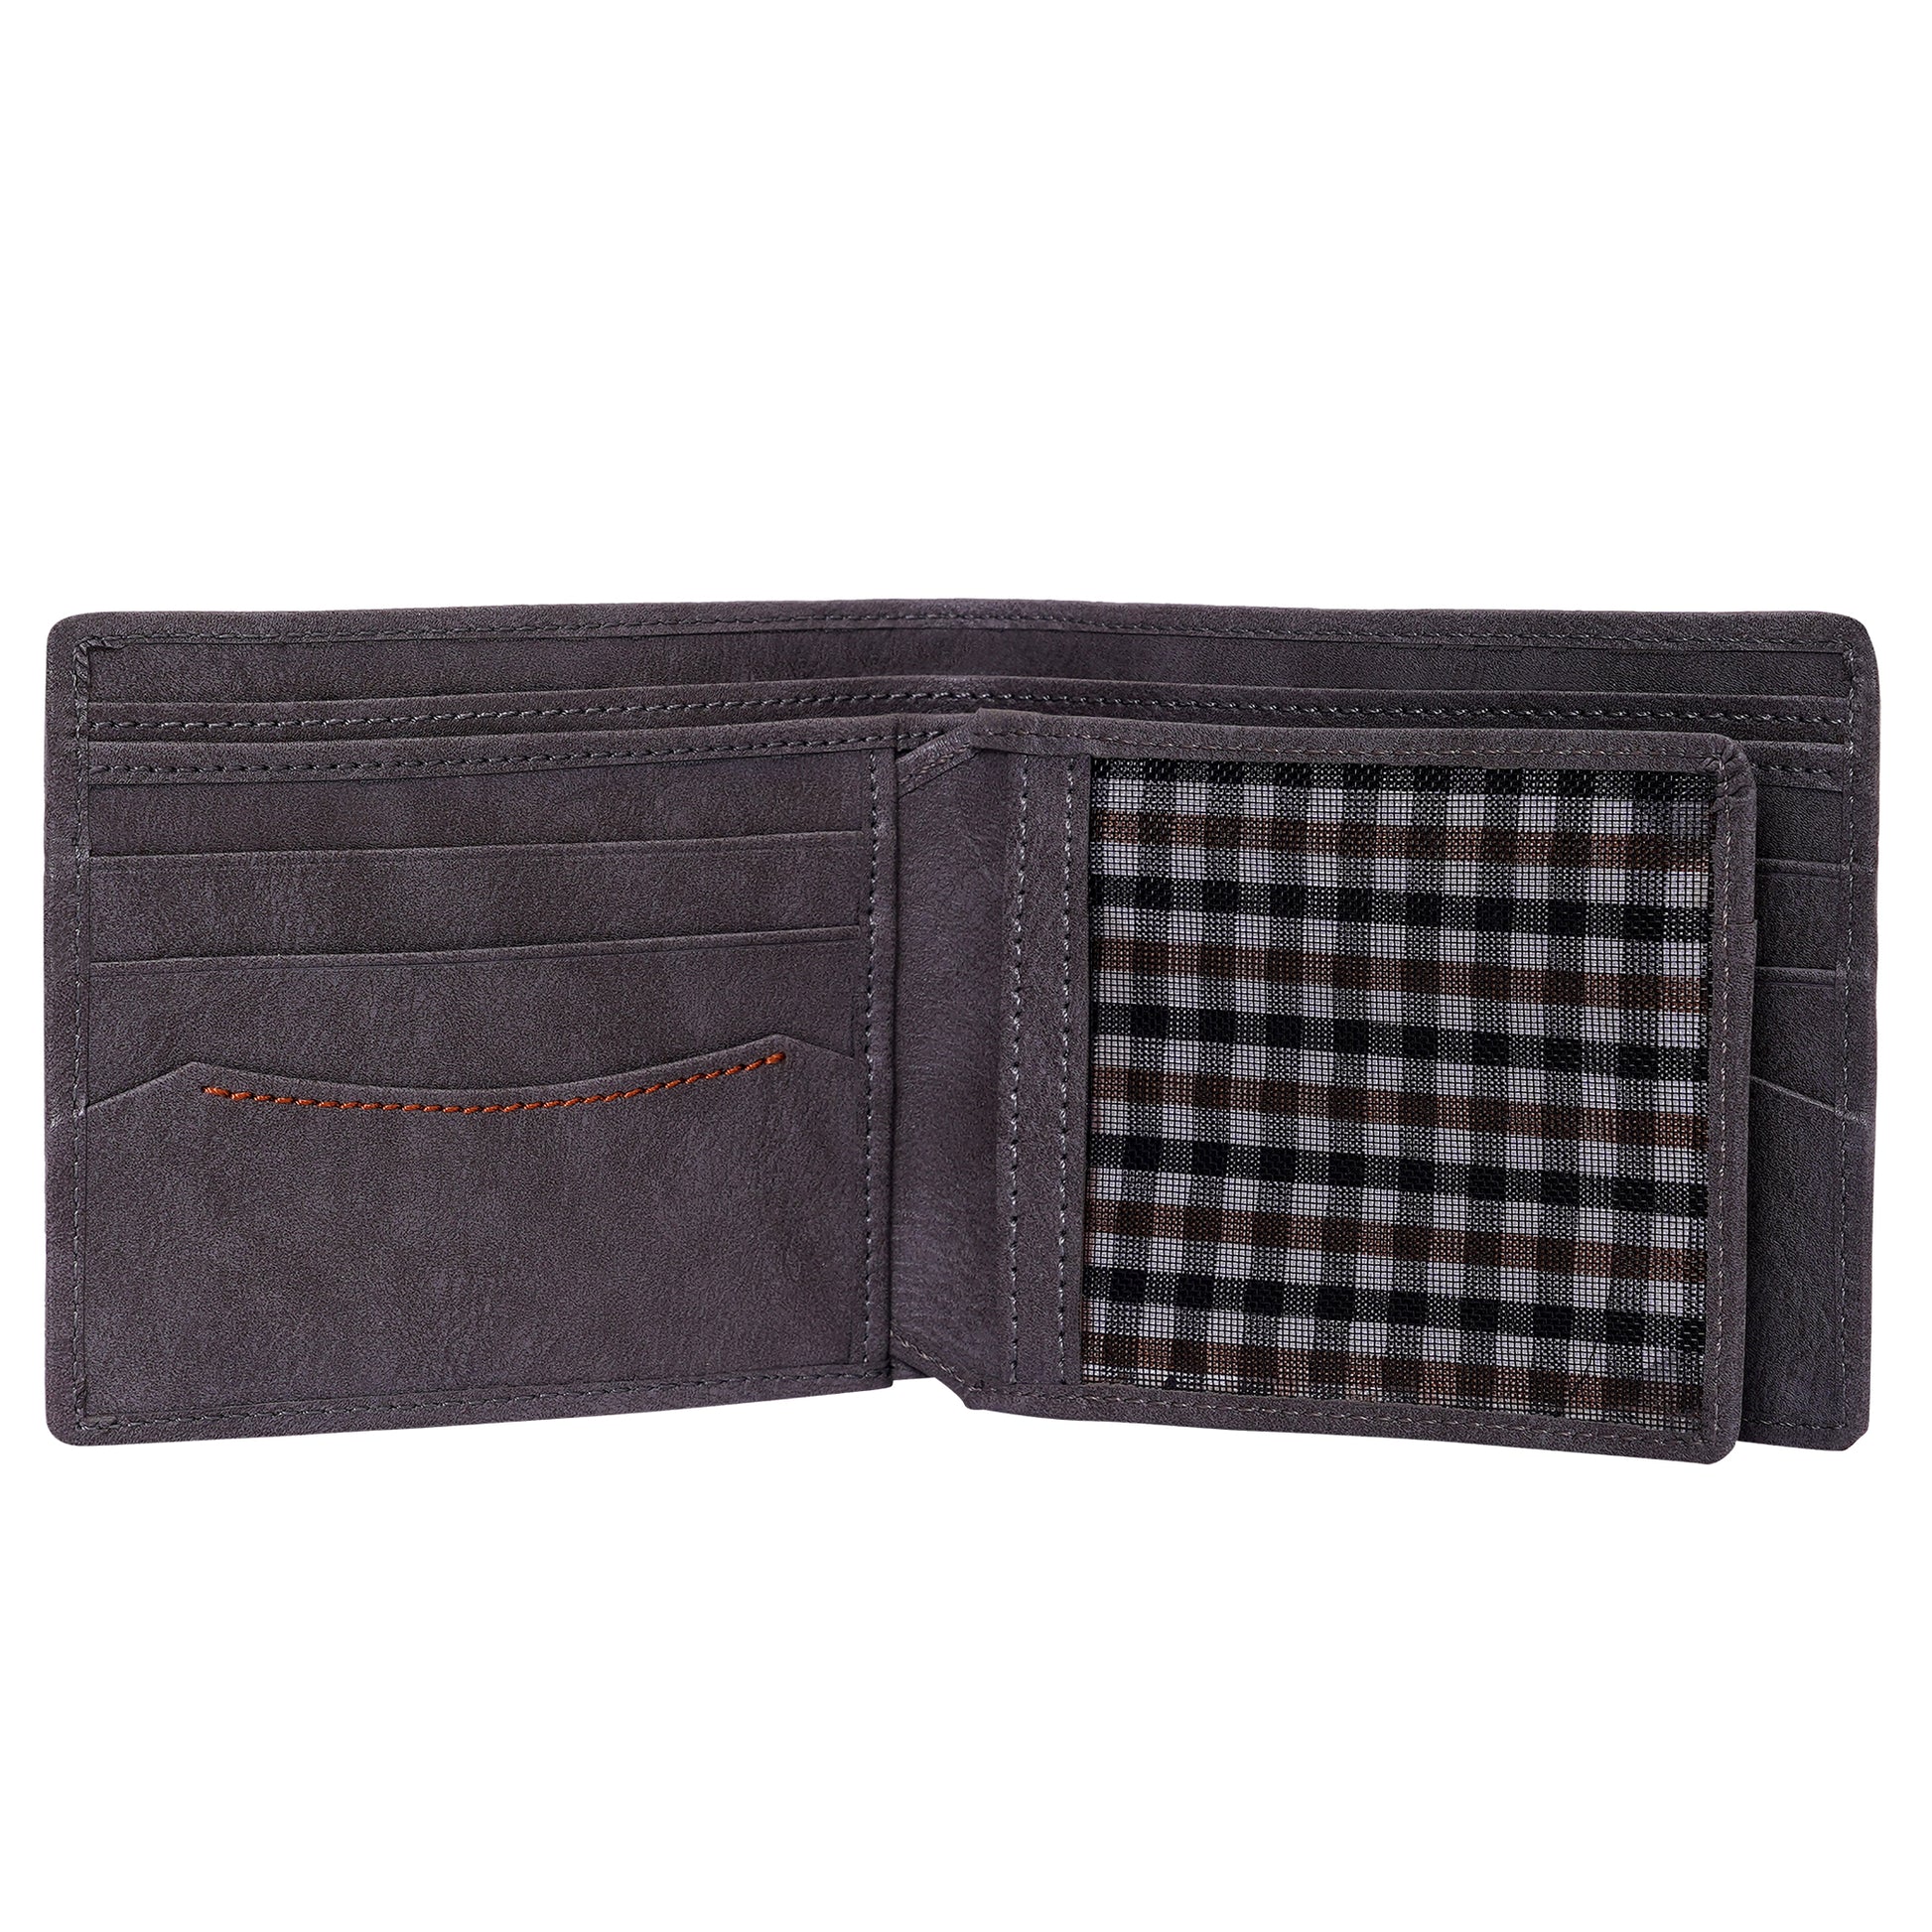 Makas men's wallet , internal look 4,color - Grey